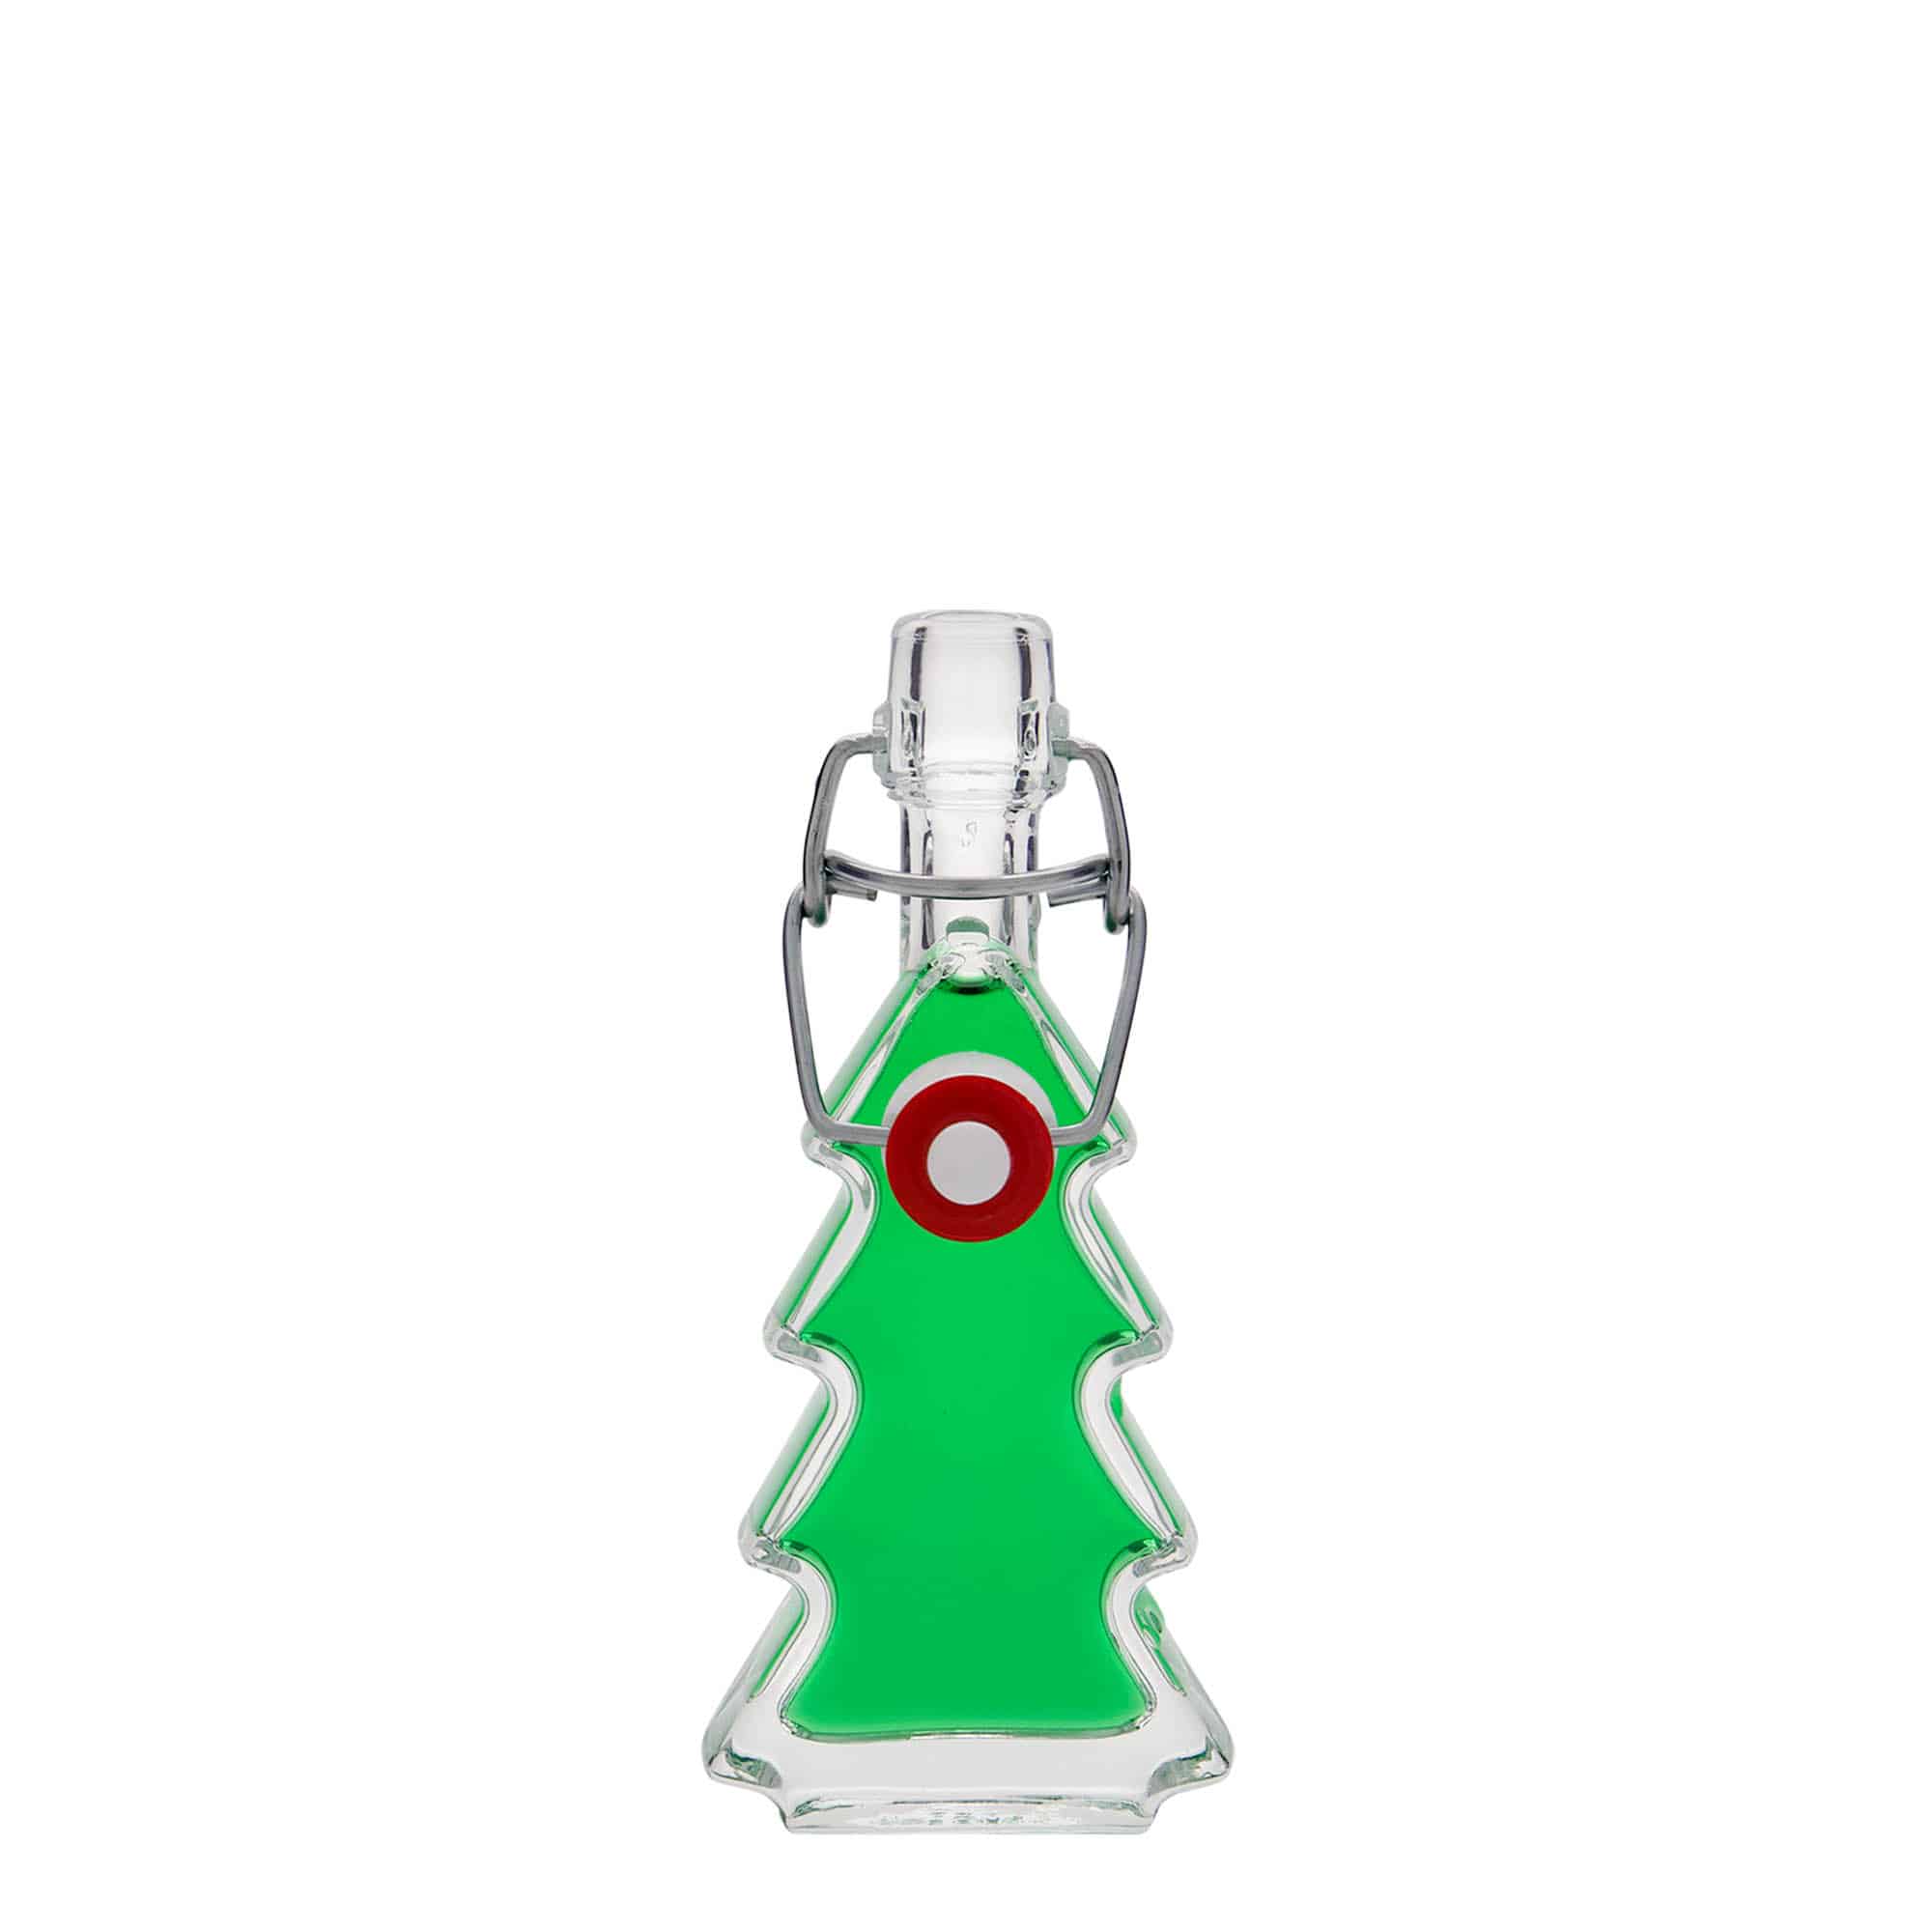 40 ml glass bottle 'Christmas Tree', closure: swing top